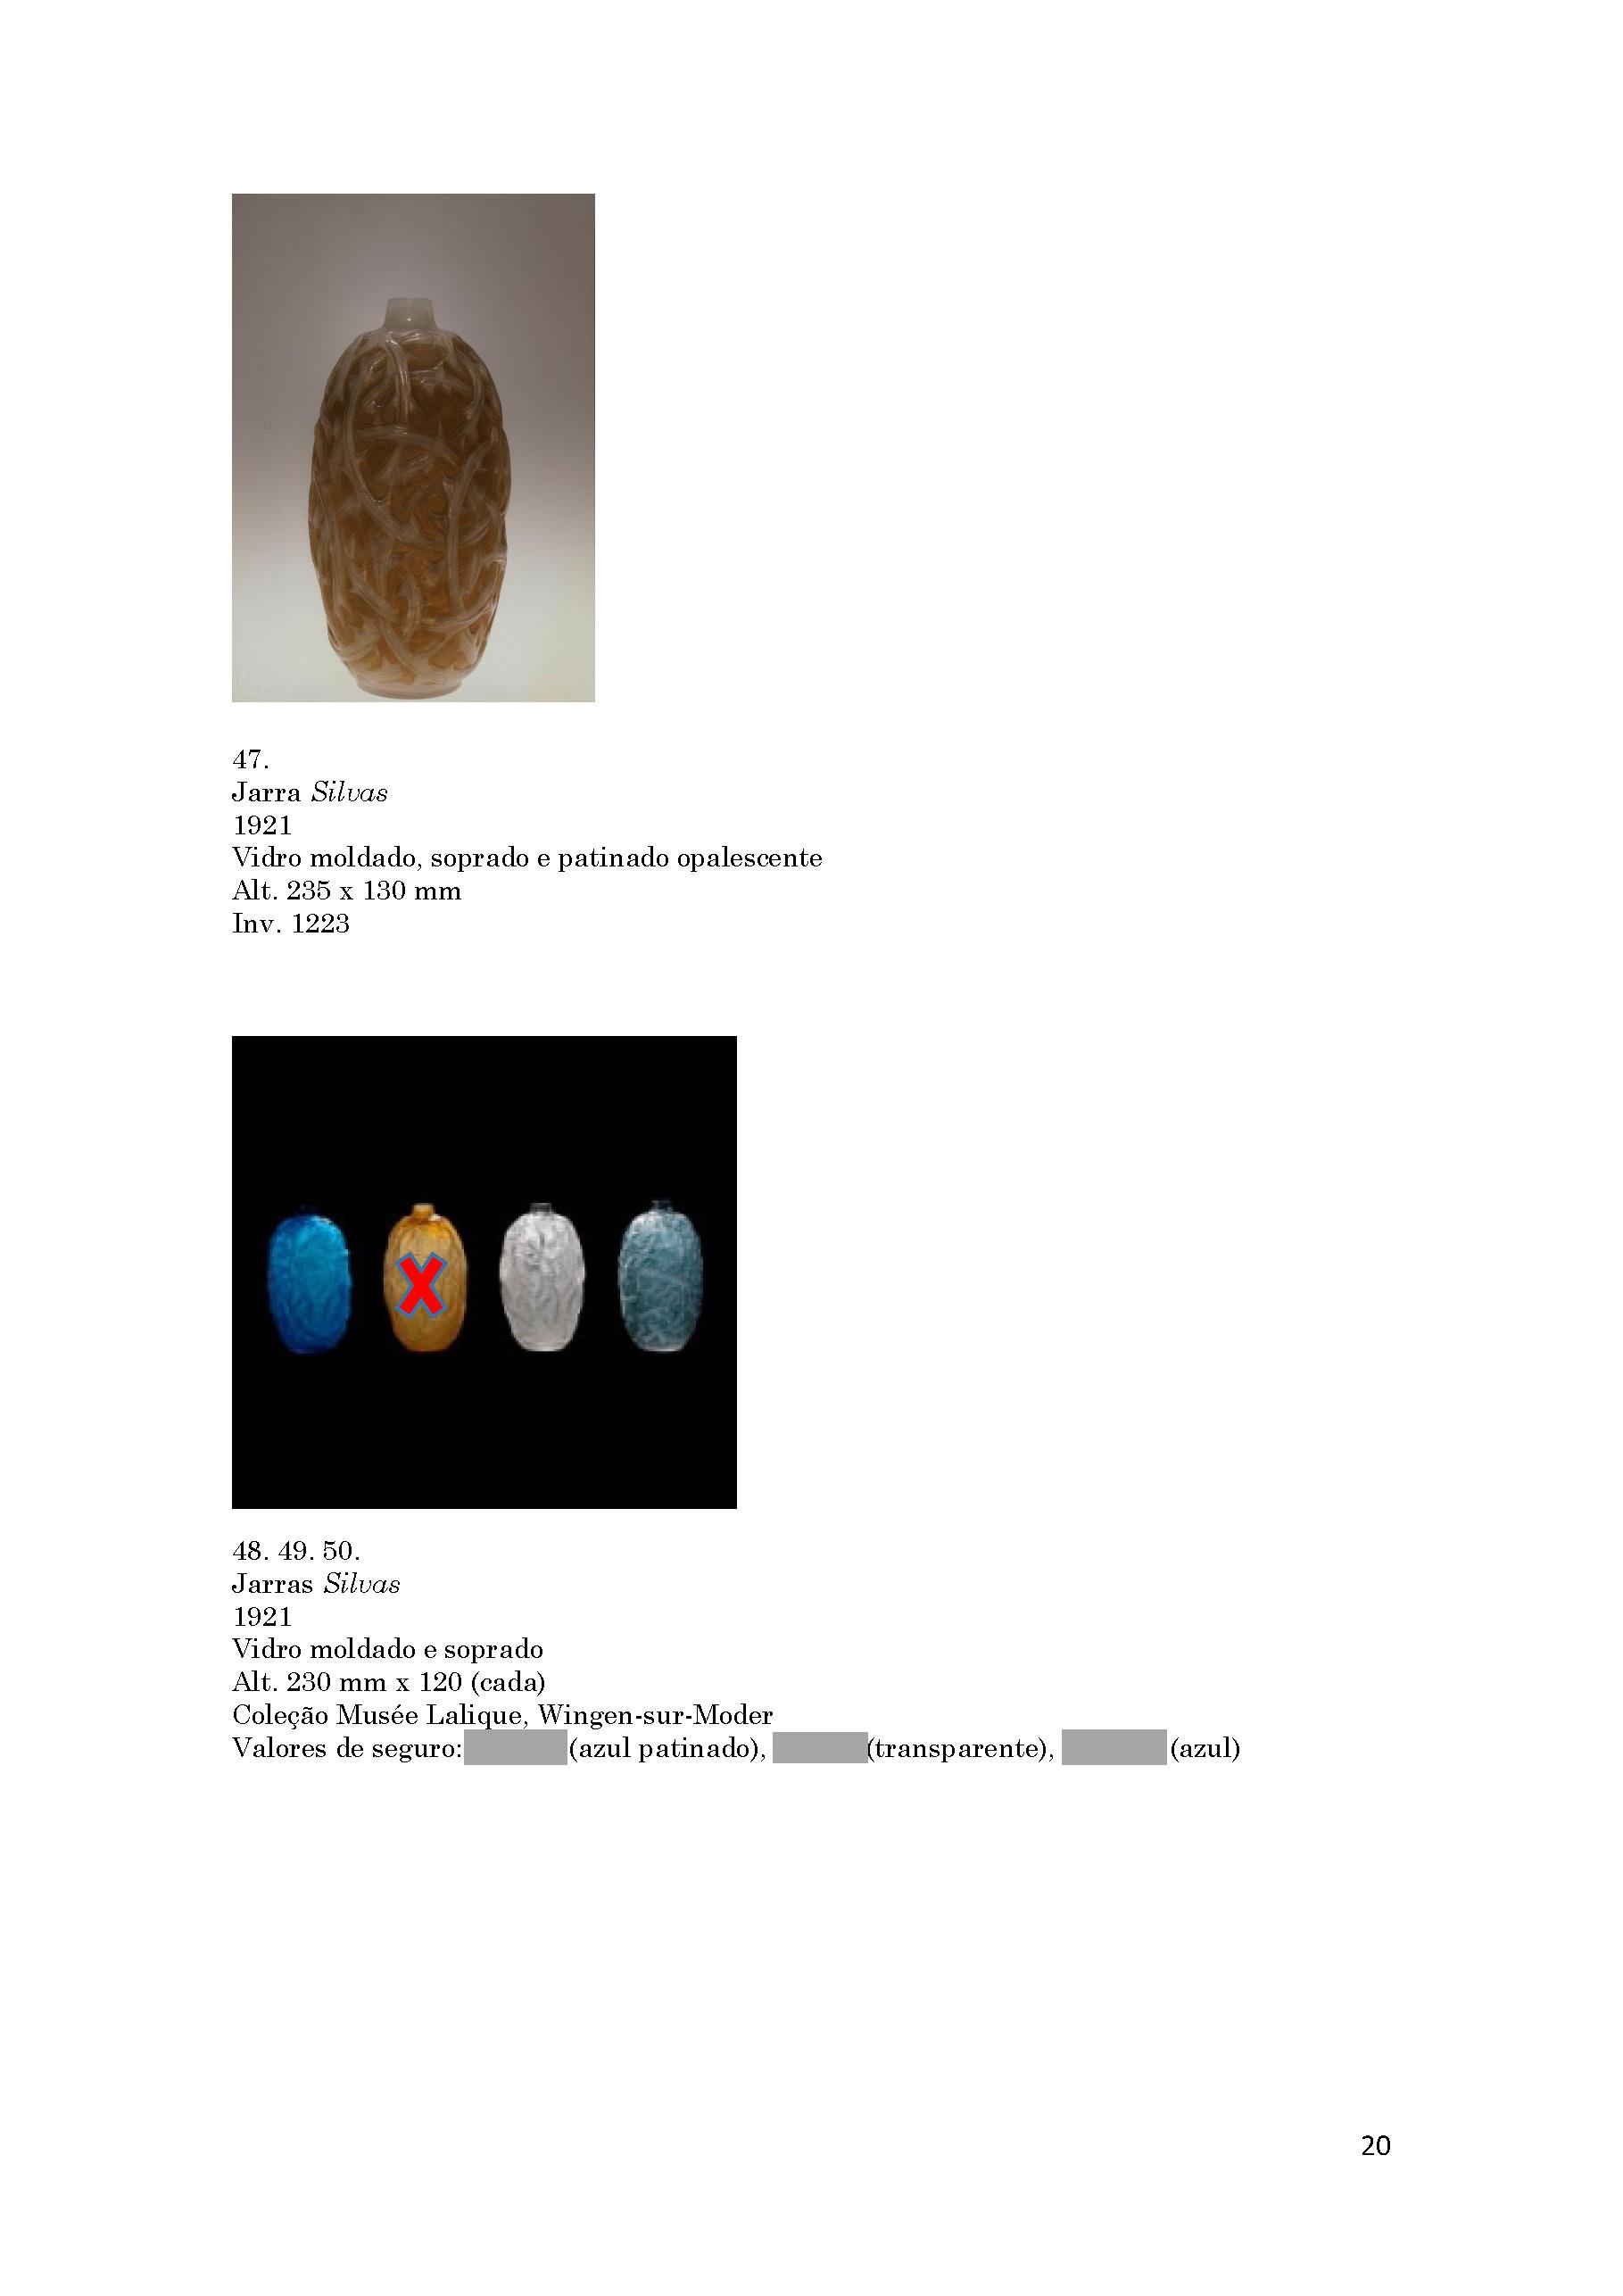 Lista_Vidros_Lalique_25.09.2020_1.20